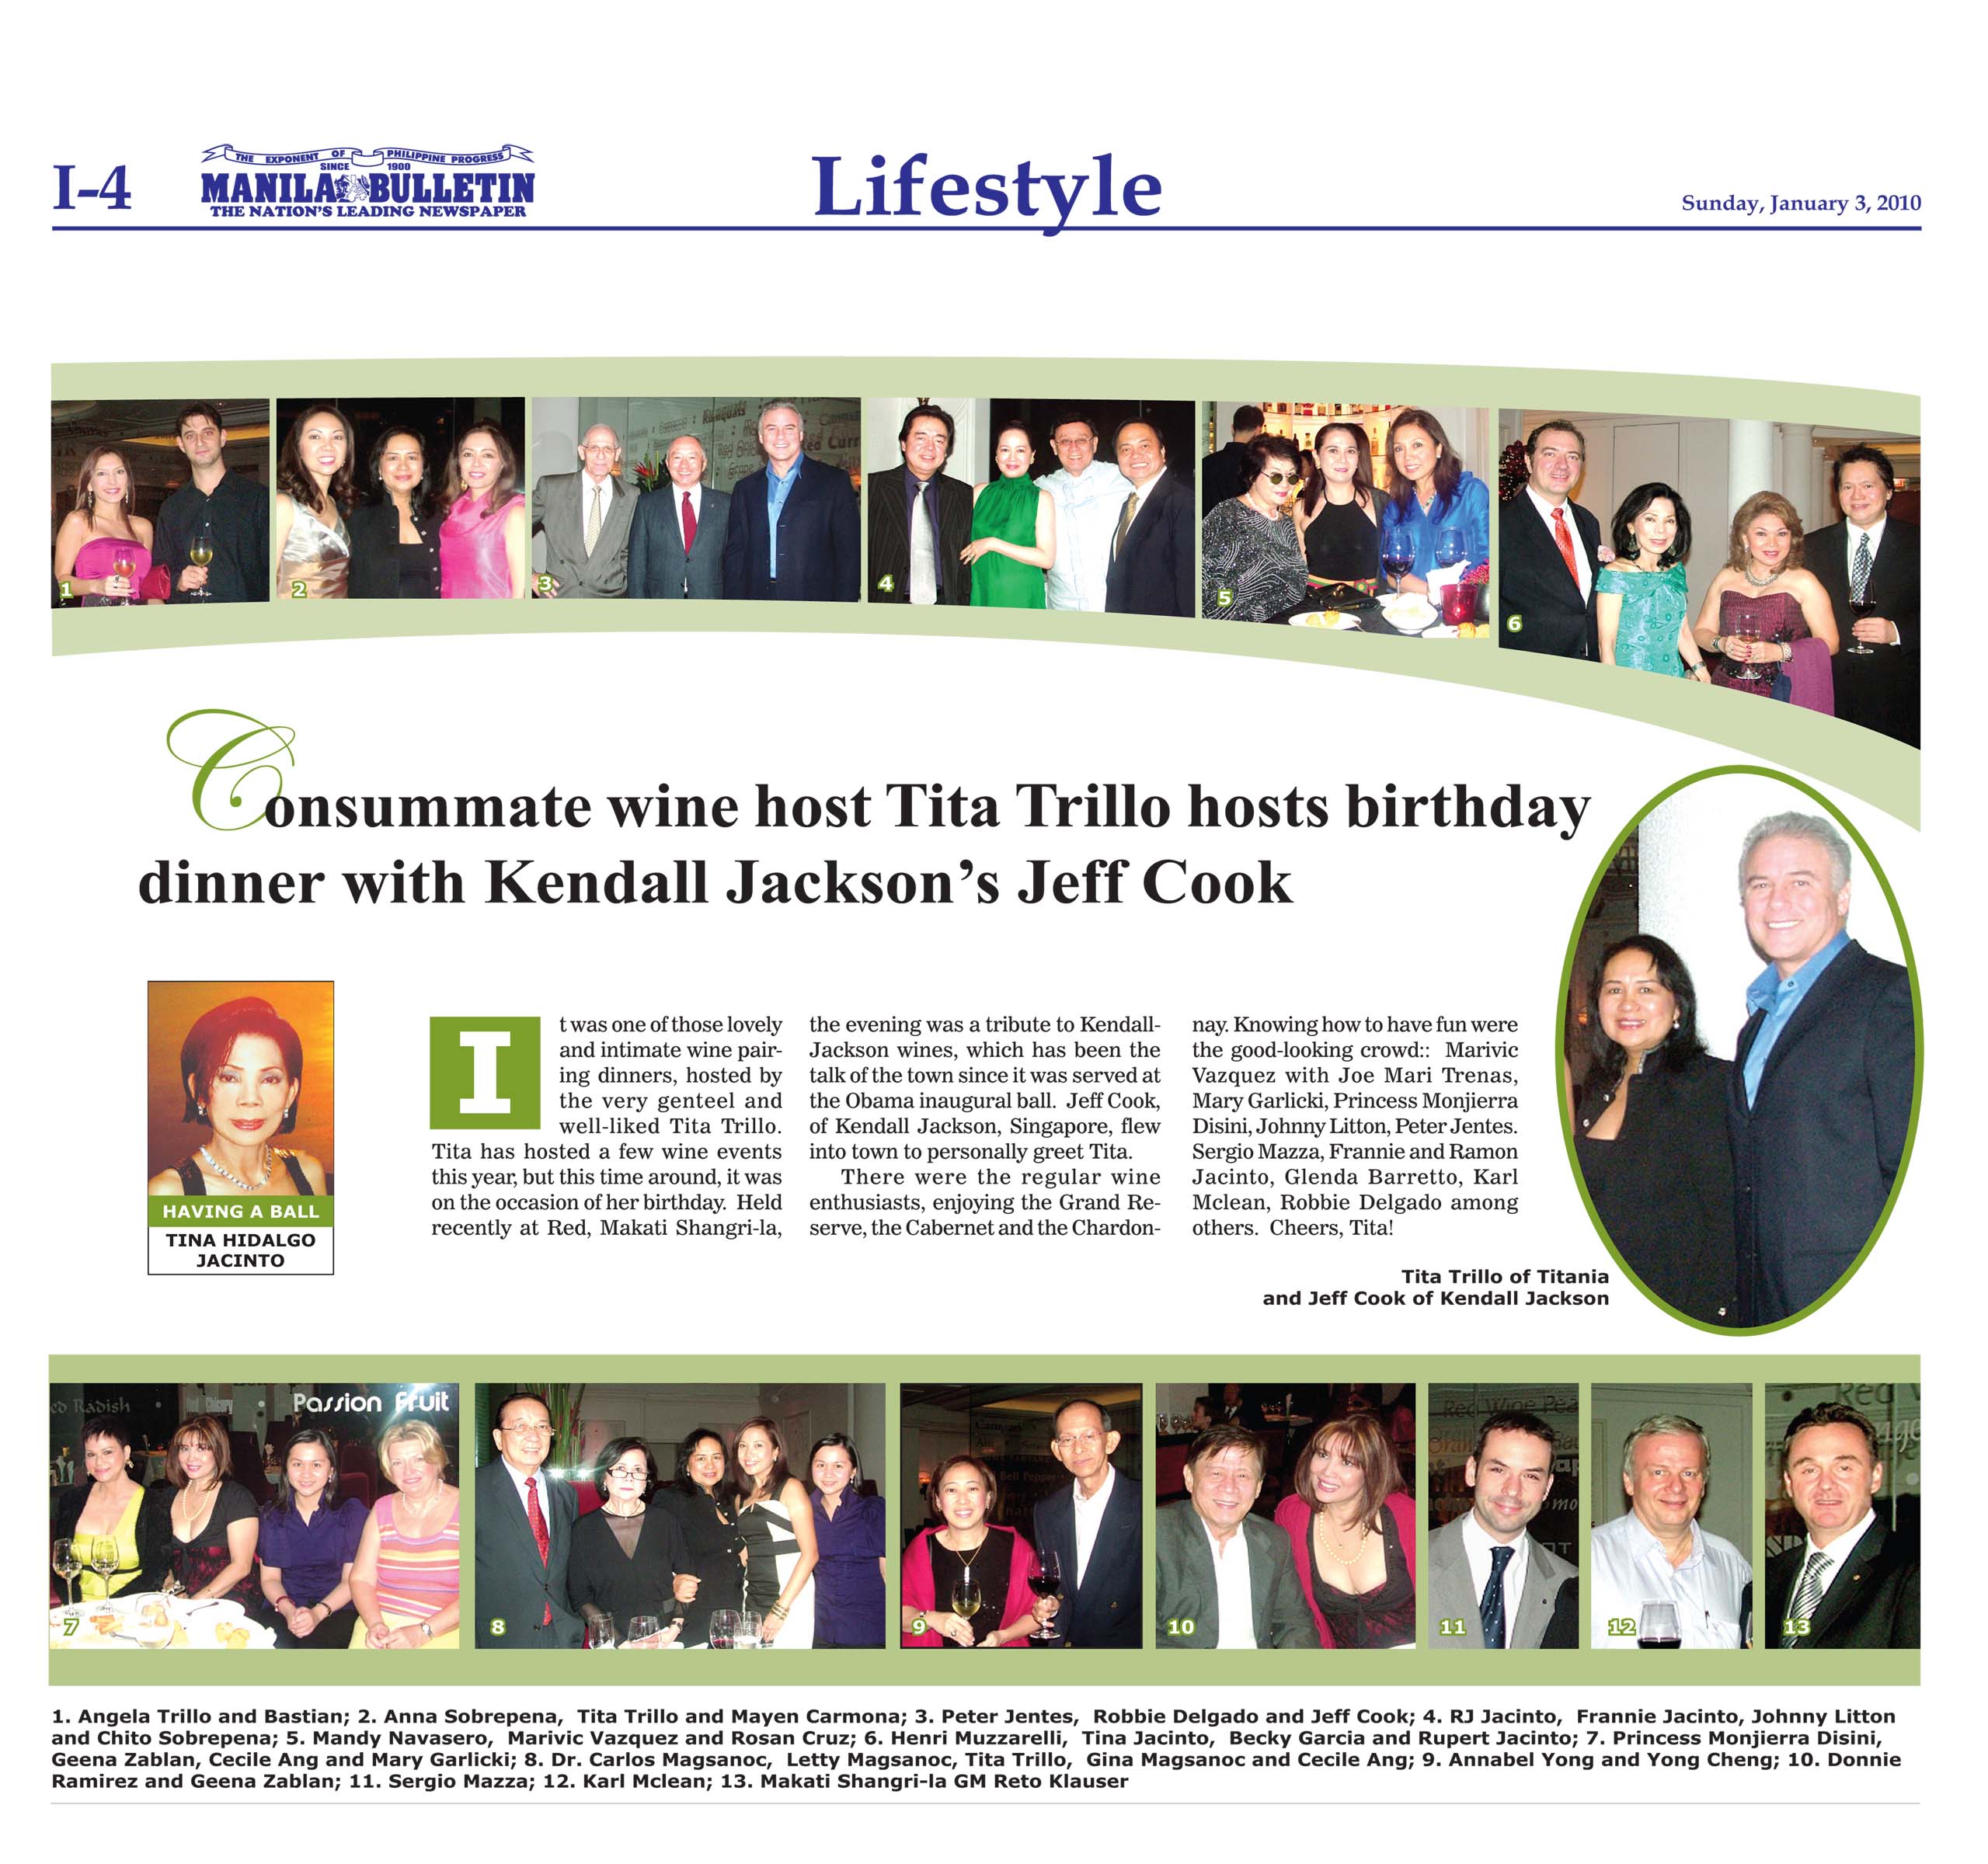 Consummate wine host Tita Trillo hosts birthday dinner with Kendall Jackson Jeff Cook